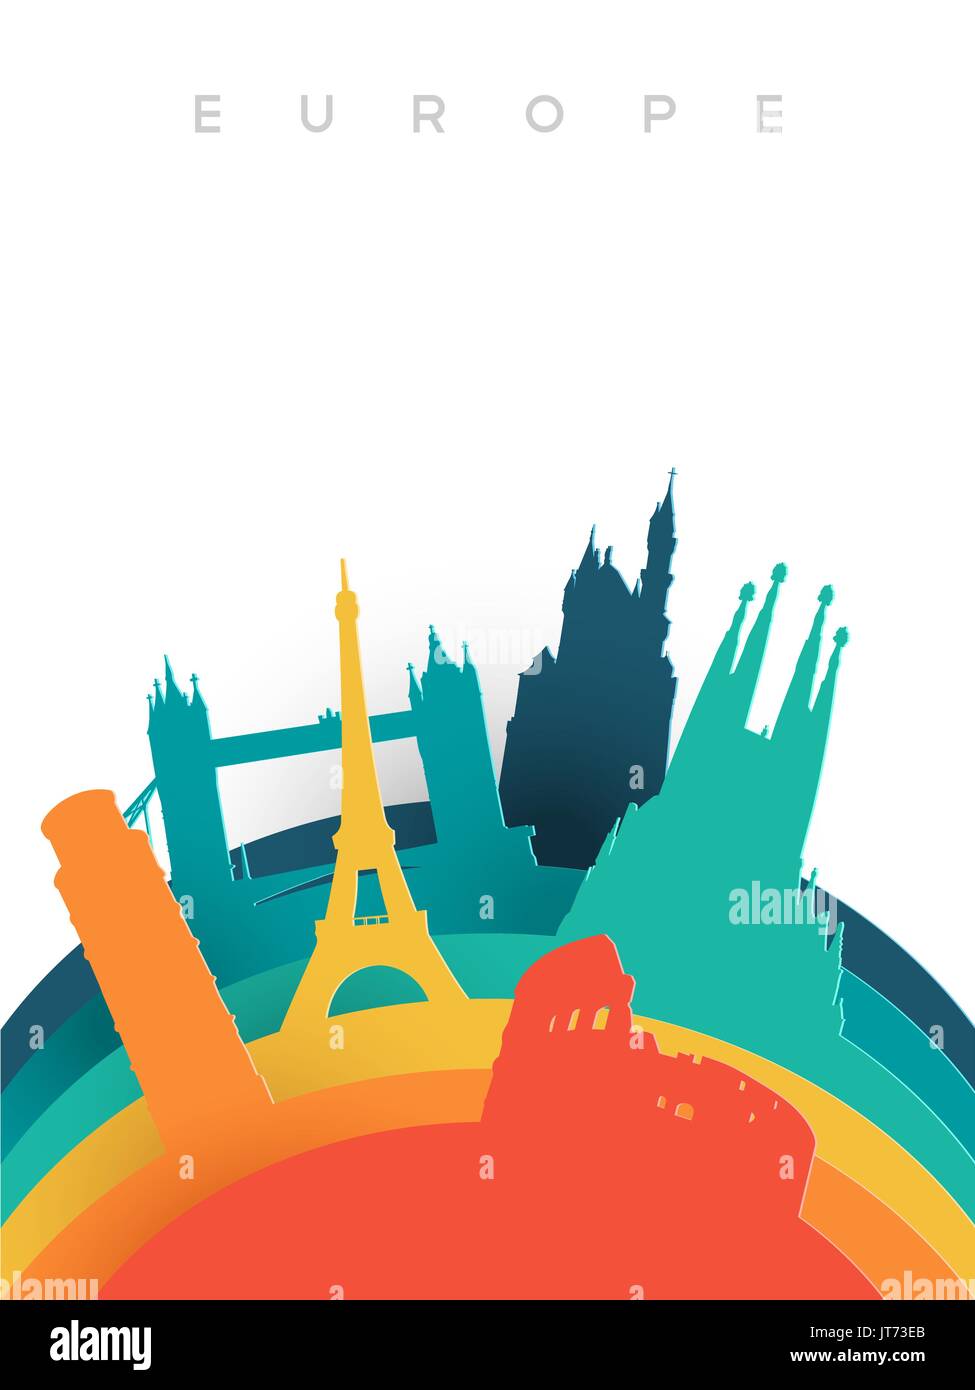 Travel Europe illustration in 3d paper cut style, European world landmarks. Includes Eiffel tower, London bridge, Rome coliseum. EPS10 vector. Stock Vector